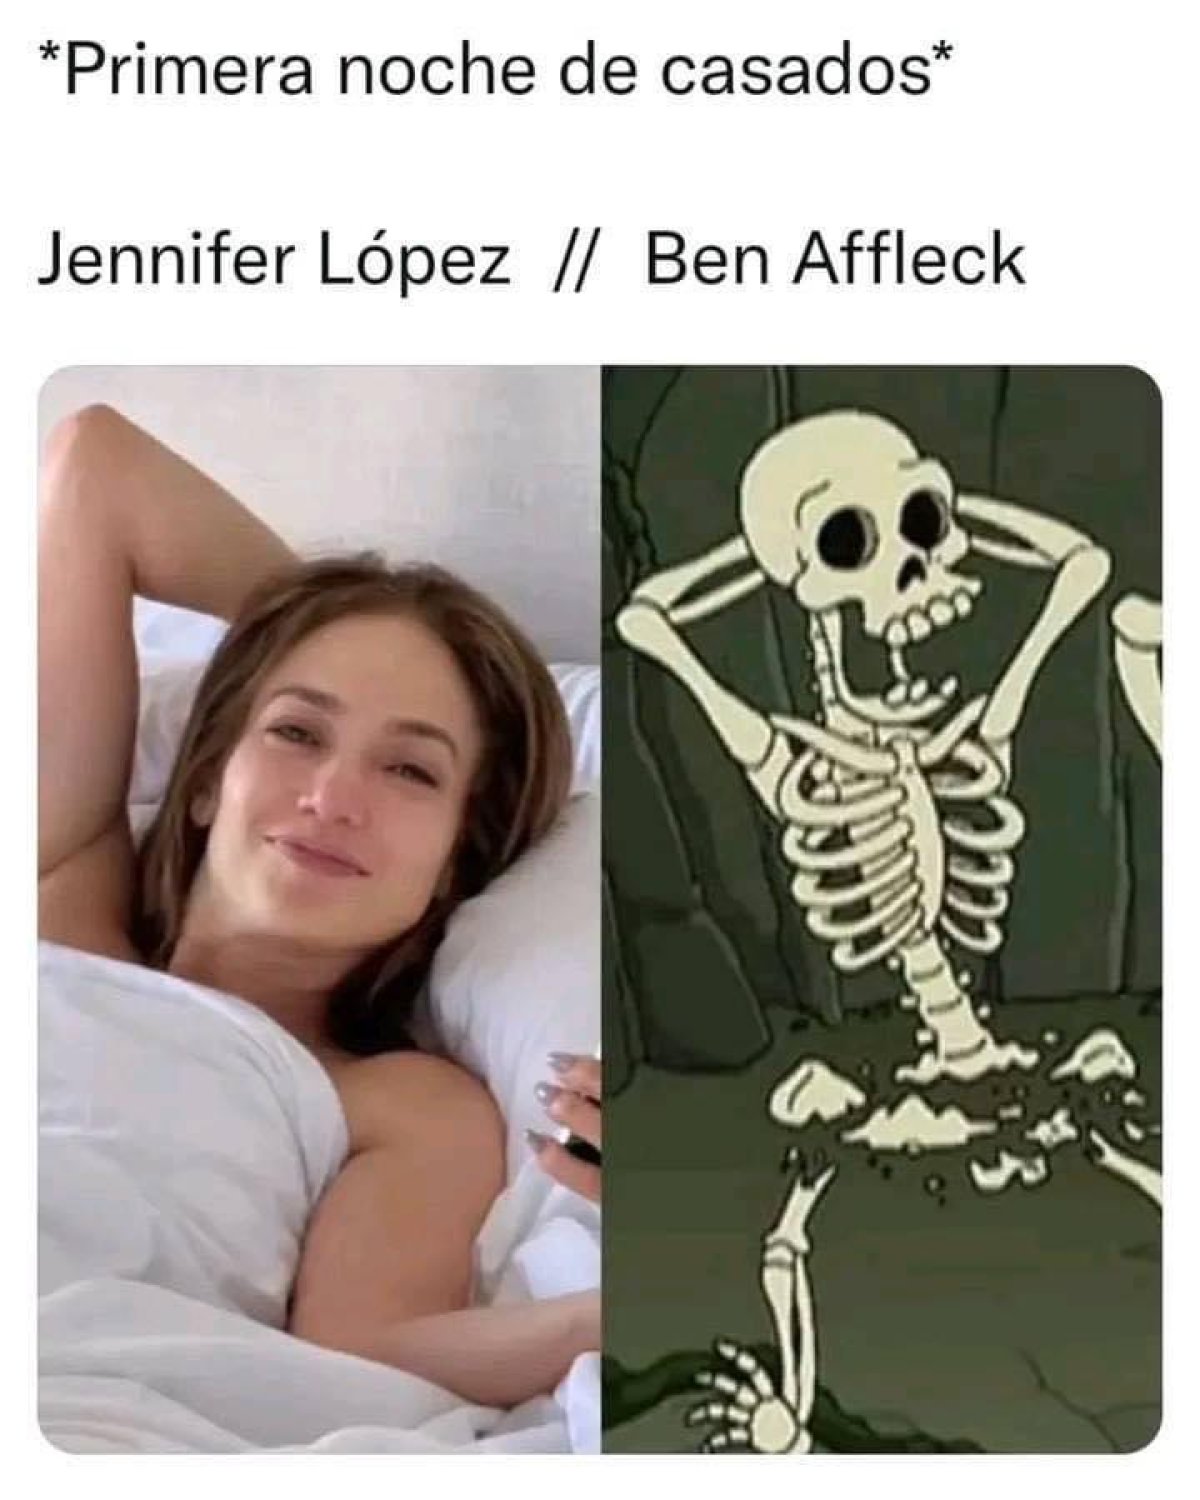 Los mejores memes de la luna de miel de Ben Affleck y Jennifer Lopez